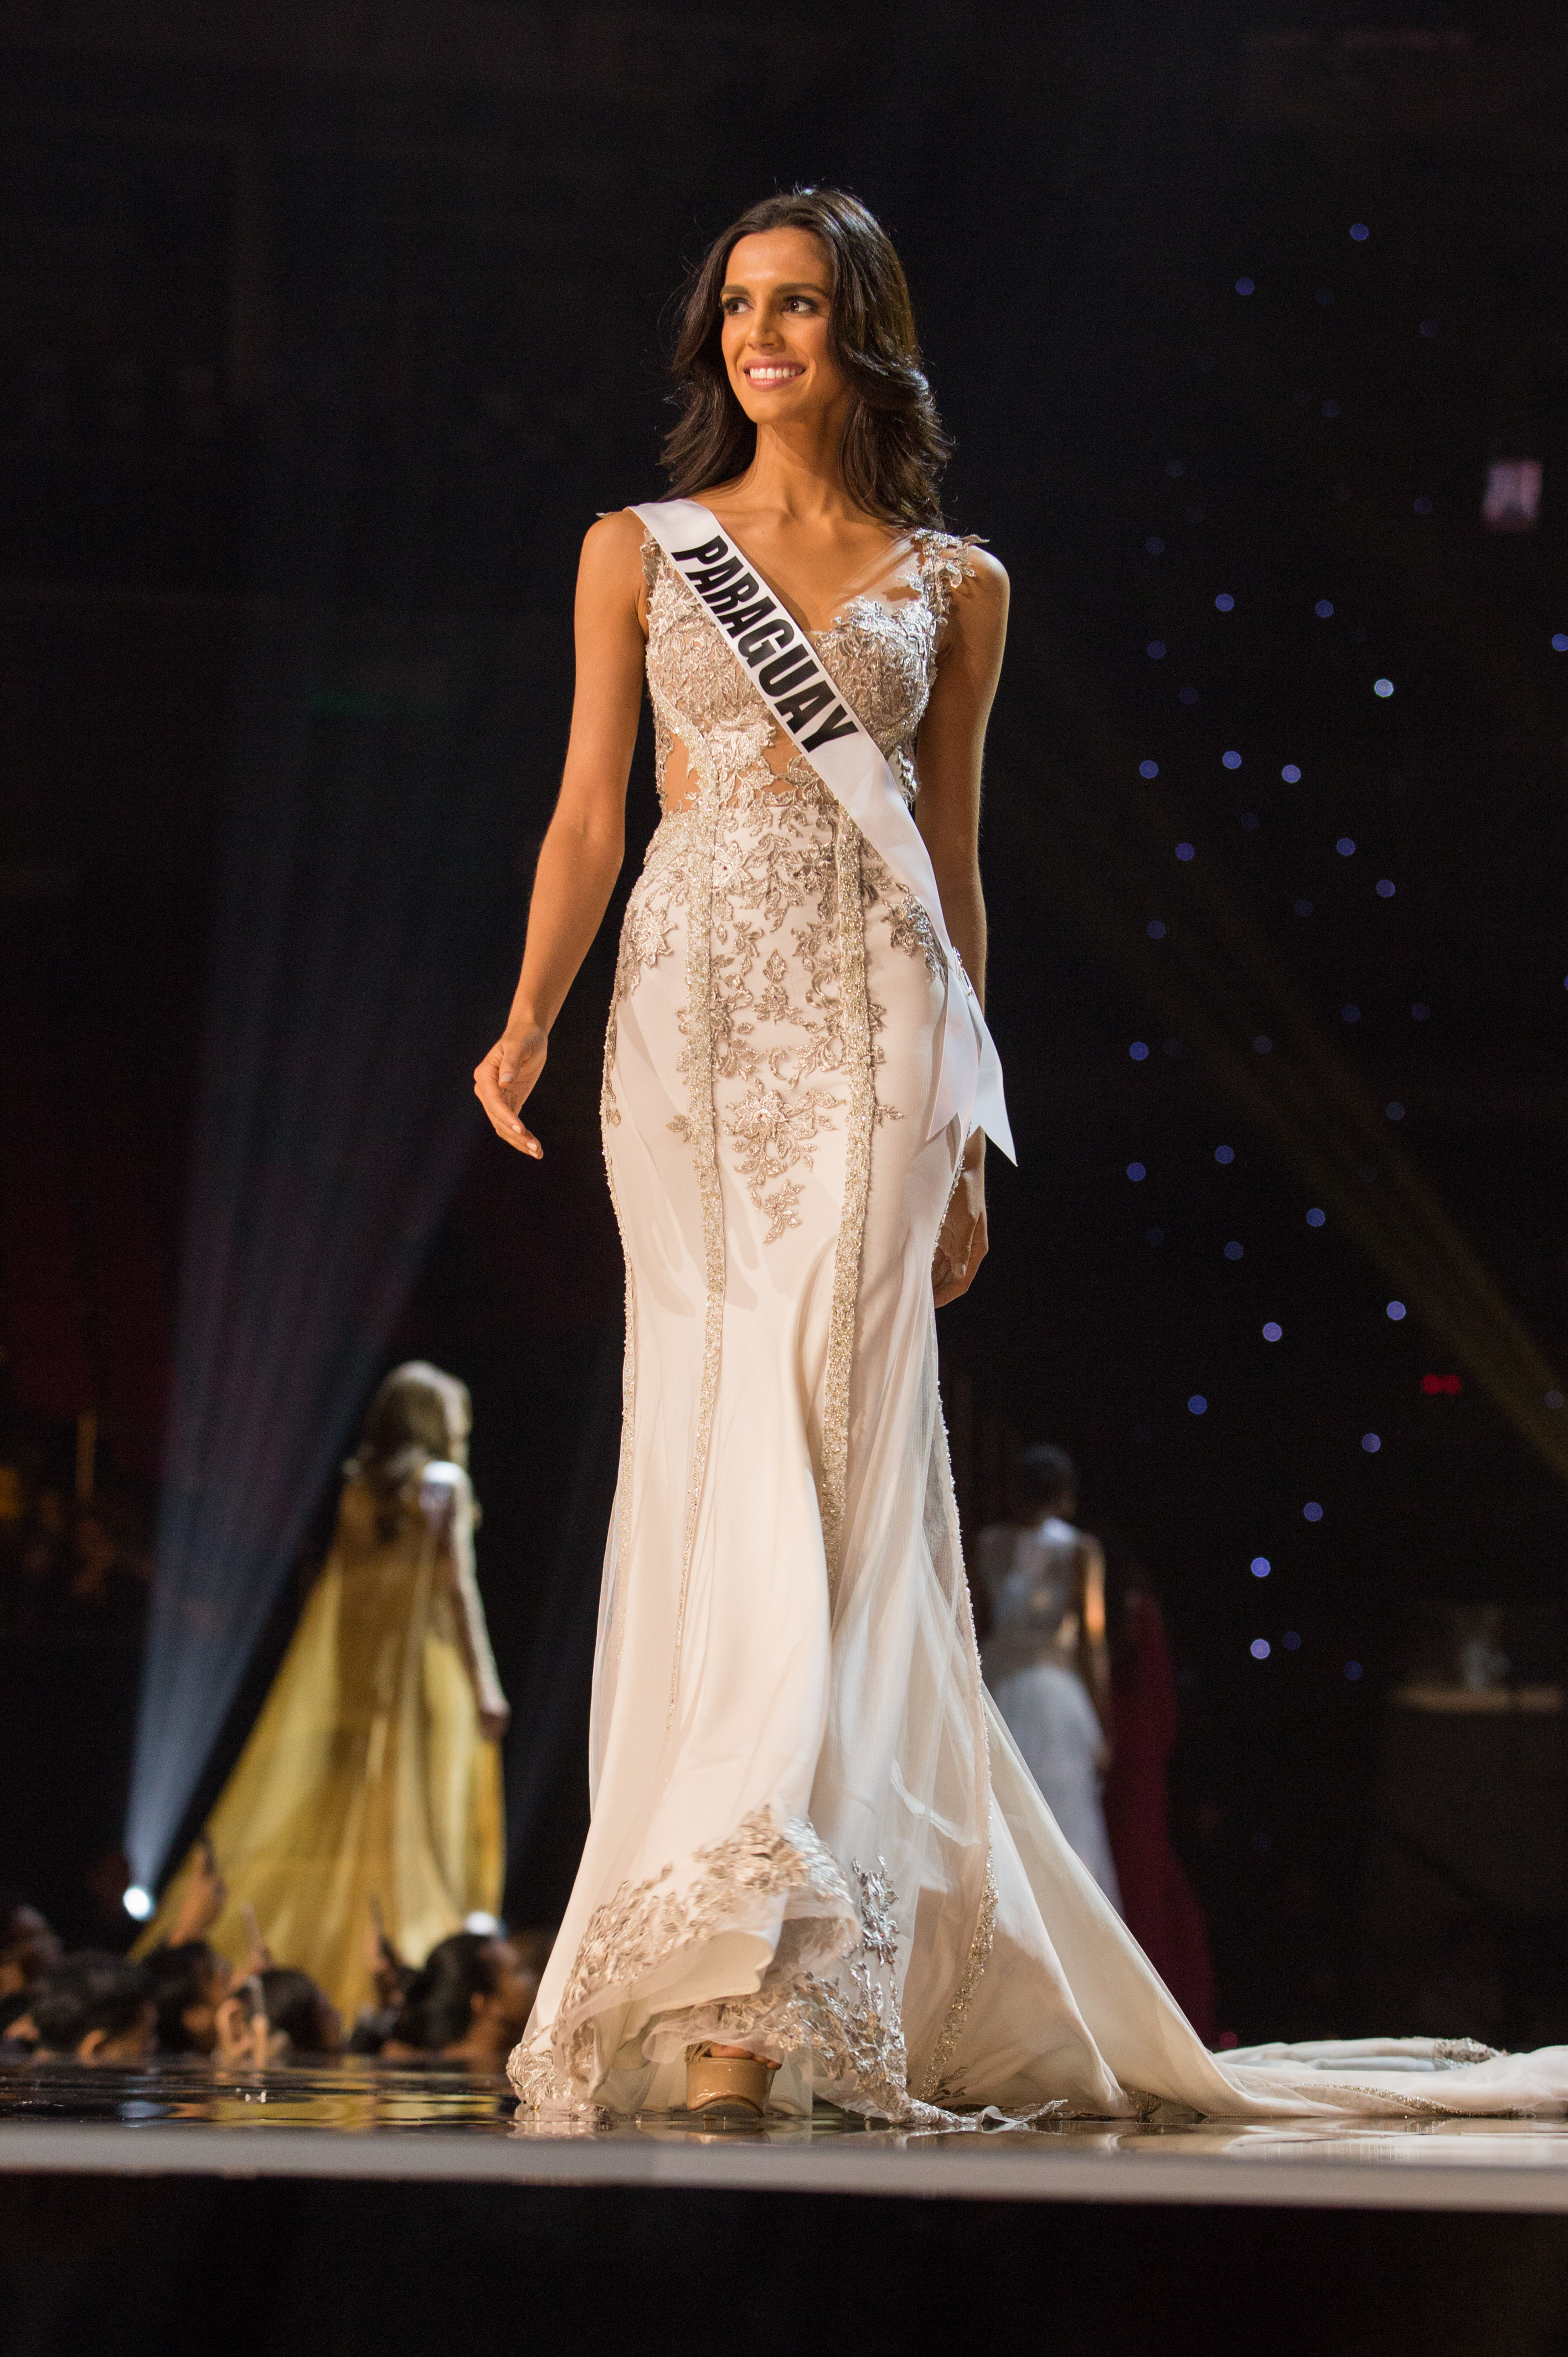 Andrea Melgarejo, Miss Paraguay 2016 